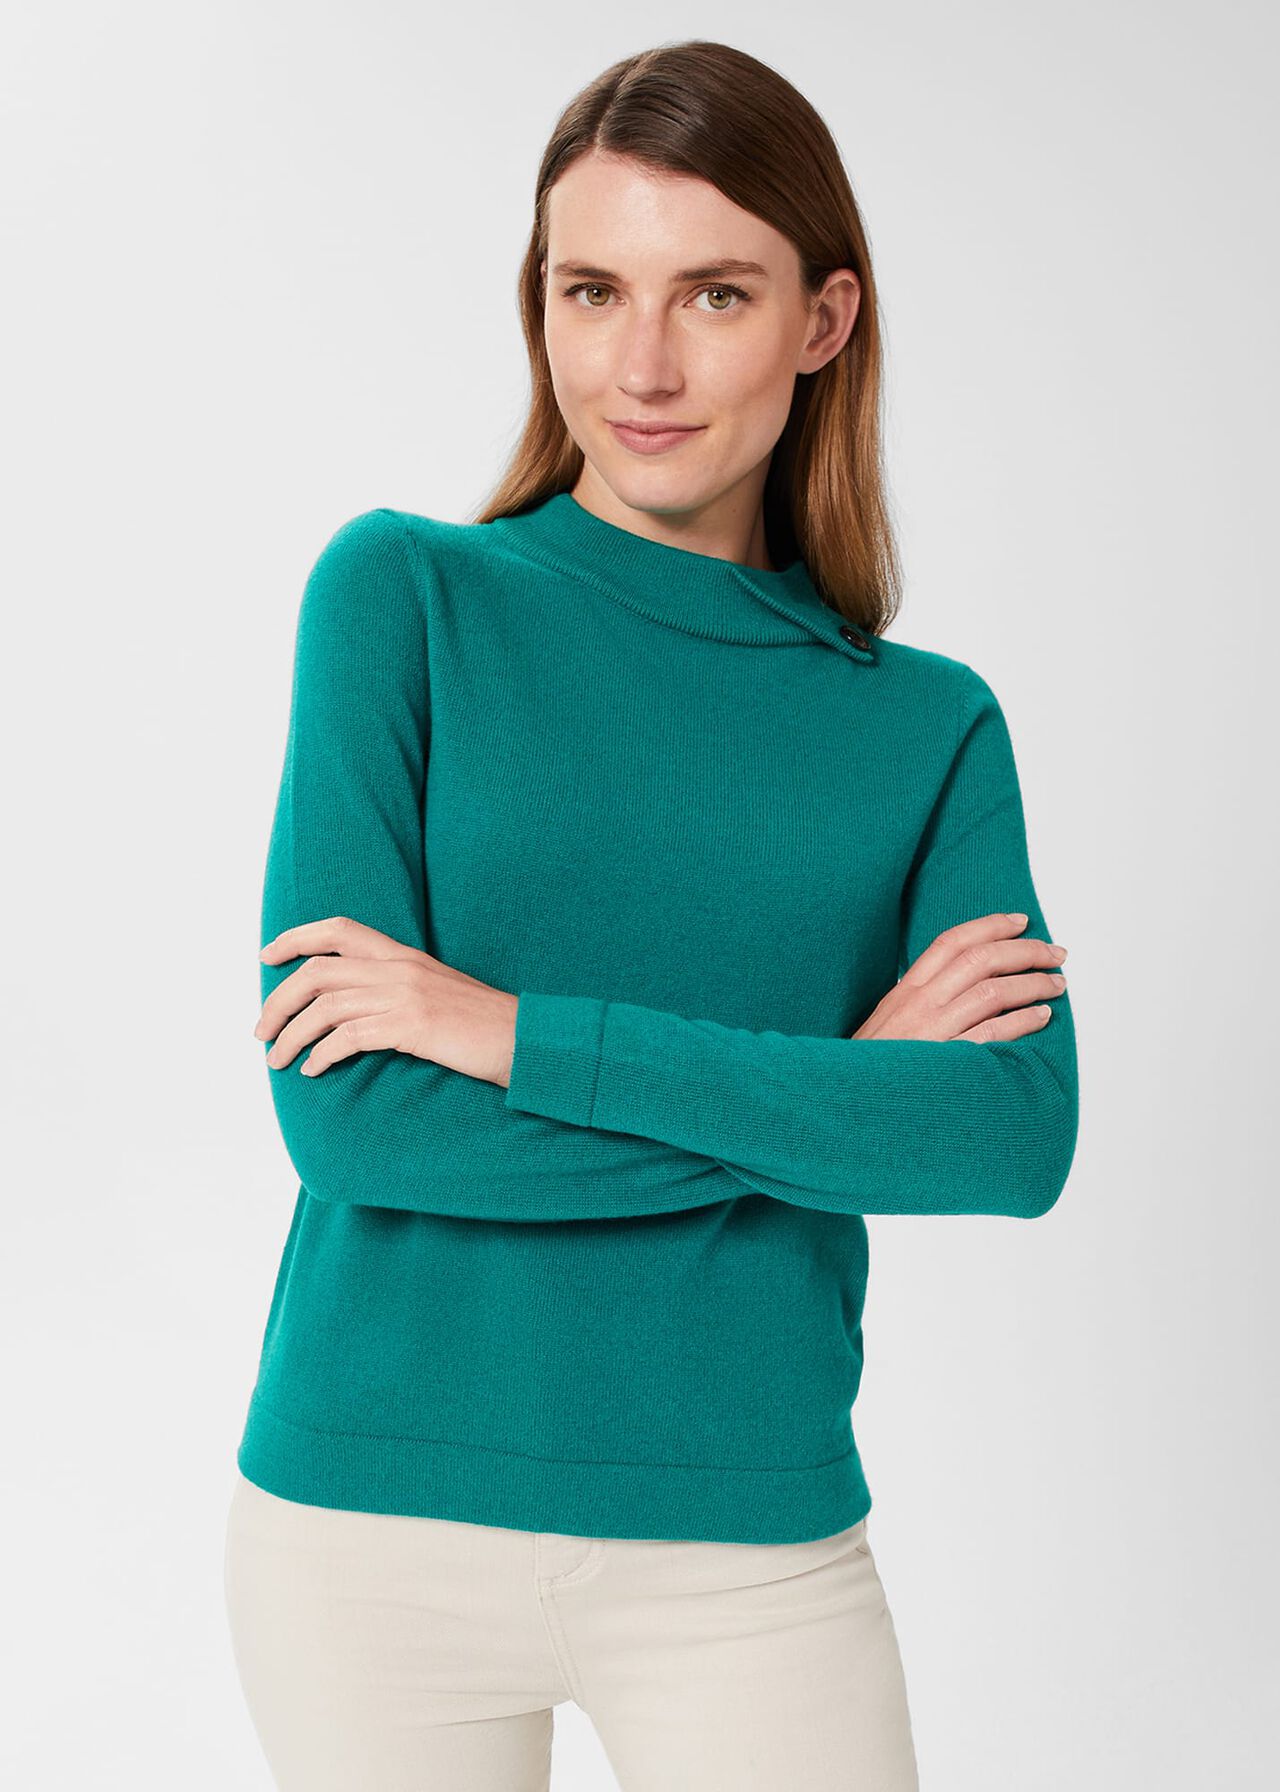 Talia Wool Cashmere Sweater, Ocean Green, hi-res